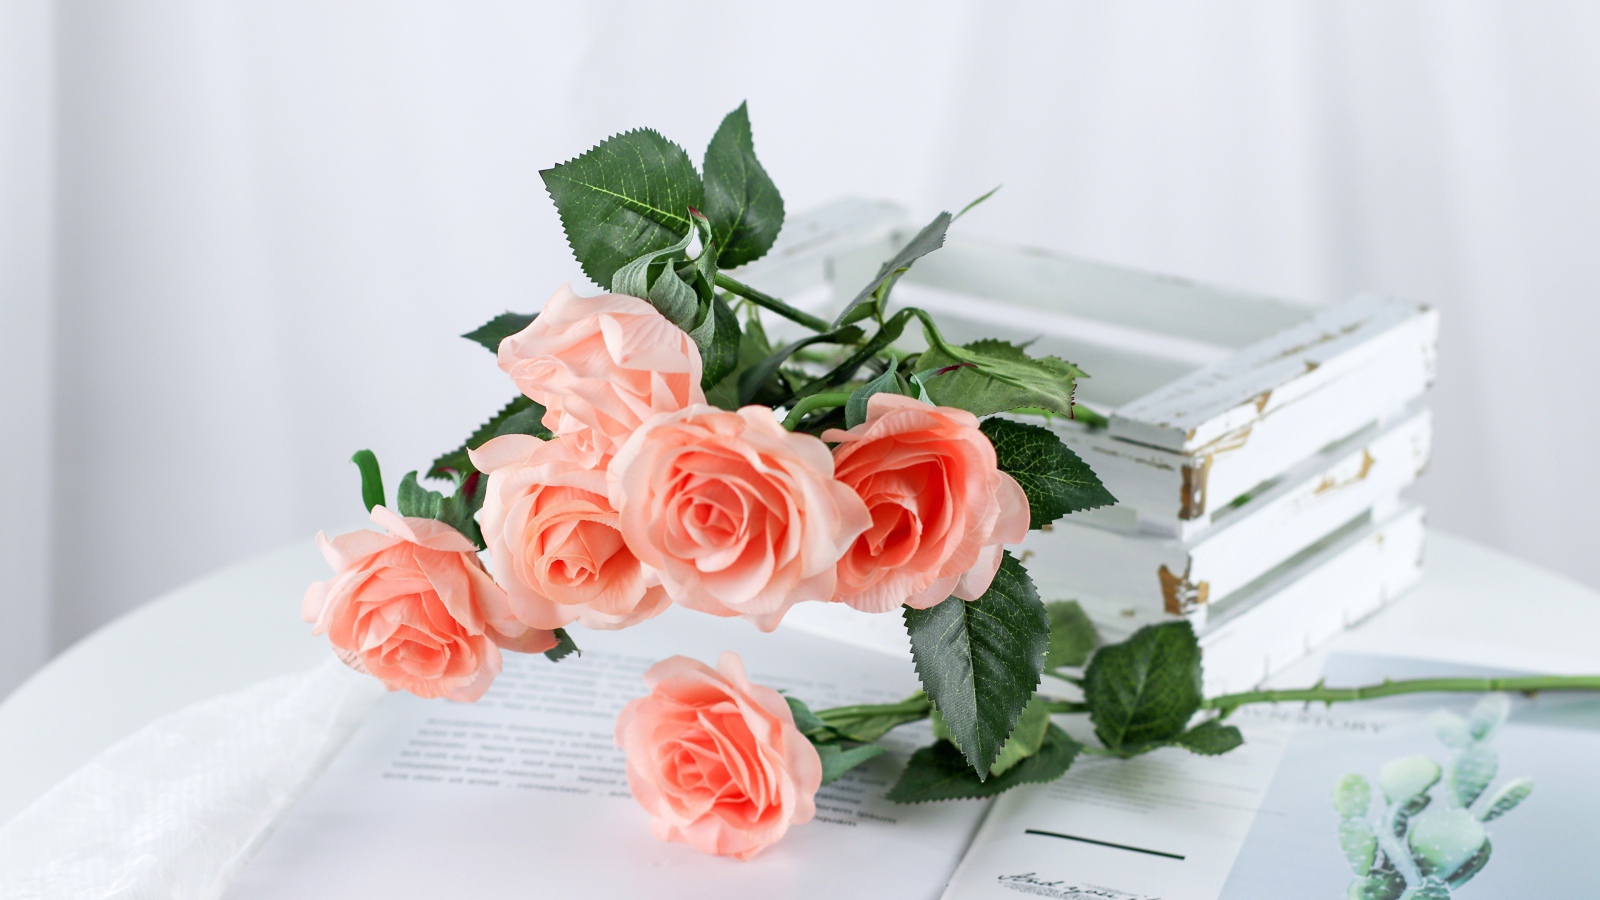 Розовые цветы лежат на столе на журнале